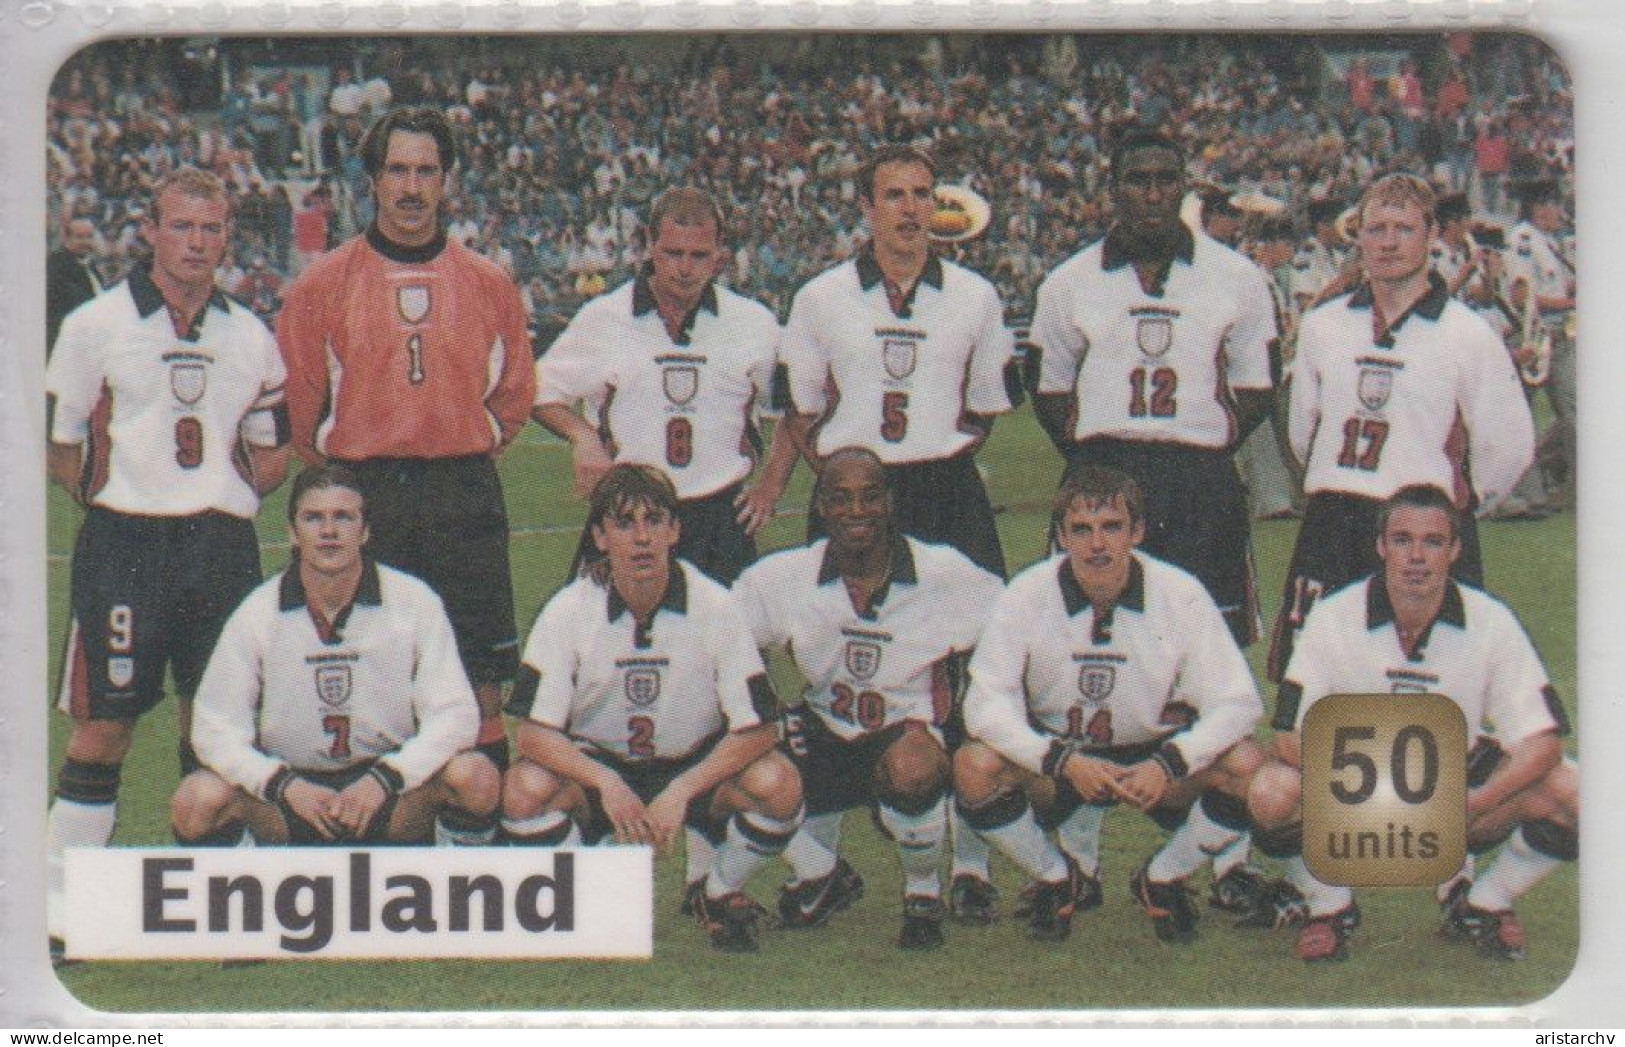 USA 1998 FOOTBALL WORLD CUP ENGLAND TEAM - Deportes